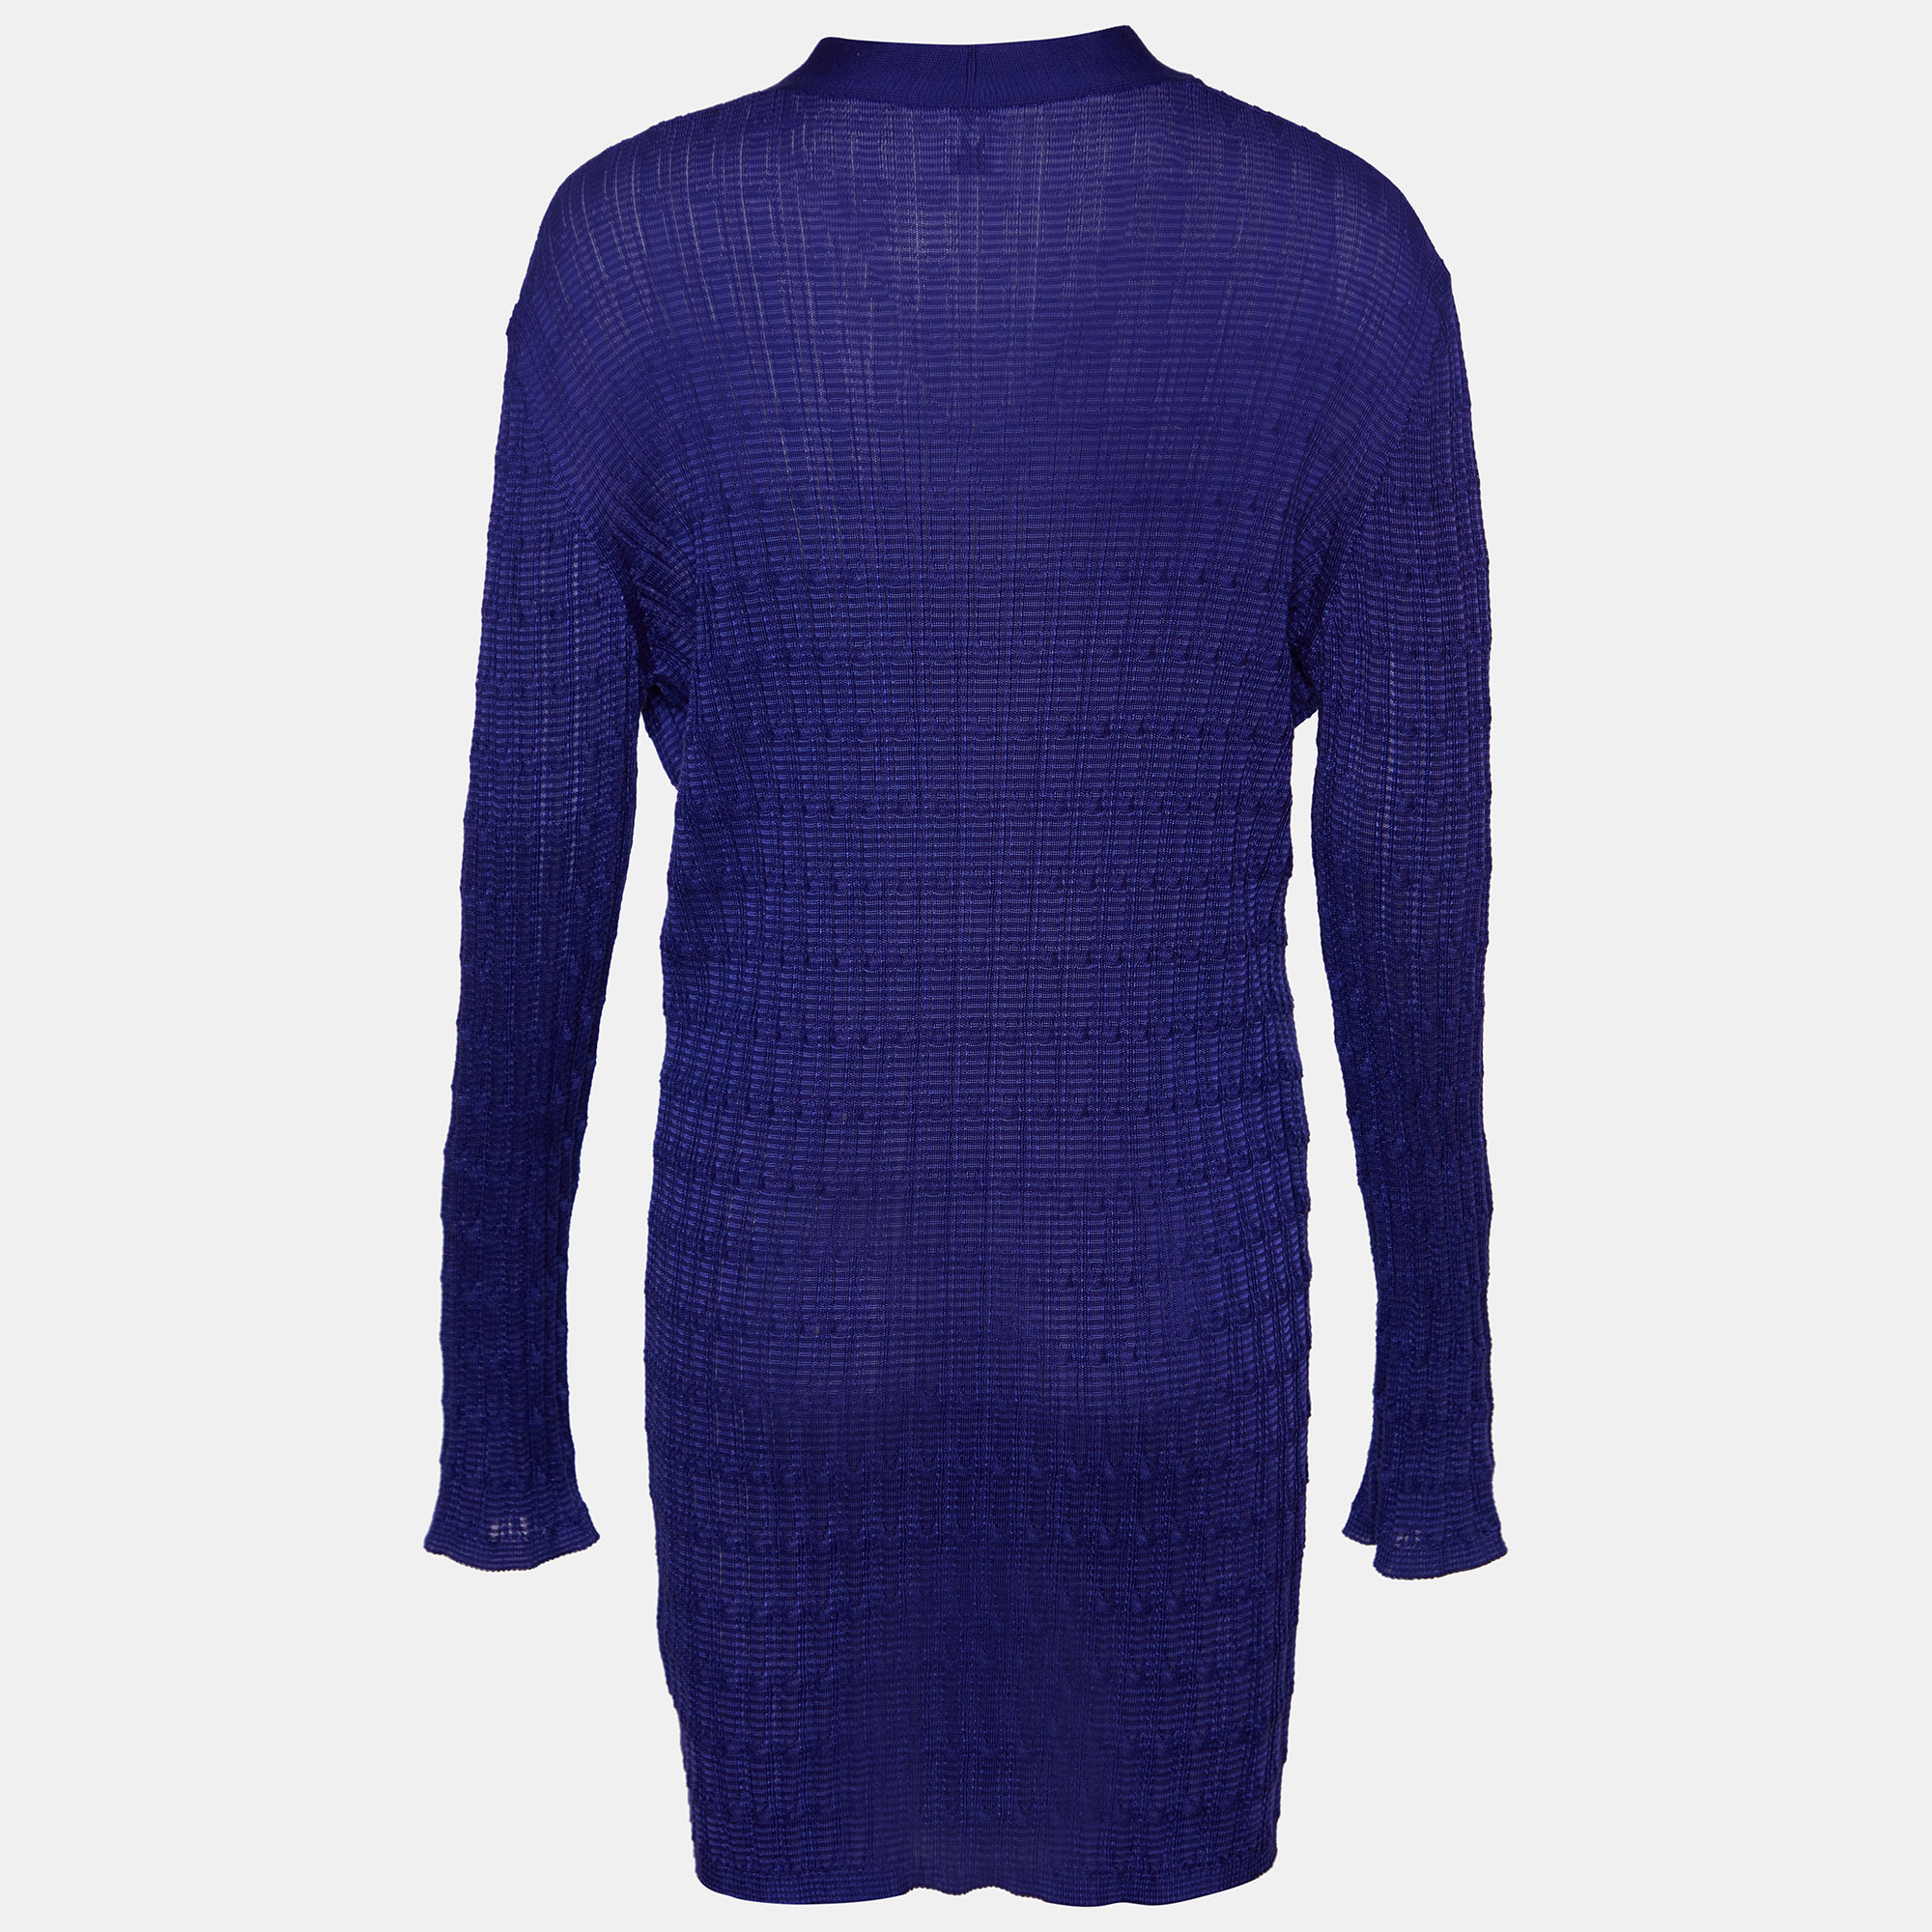 

M Missoni Purple Textured Knit Open Front Cardigan